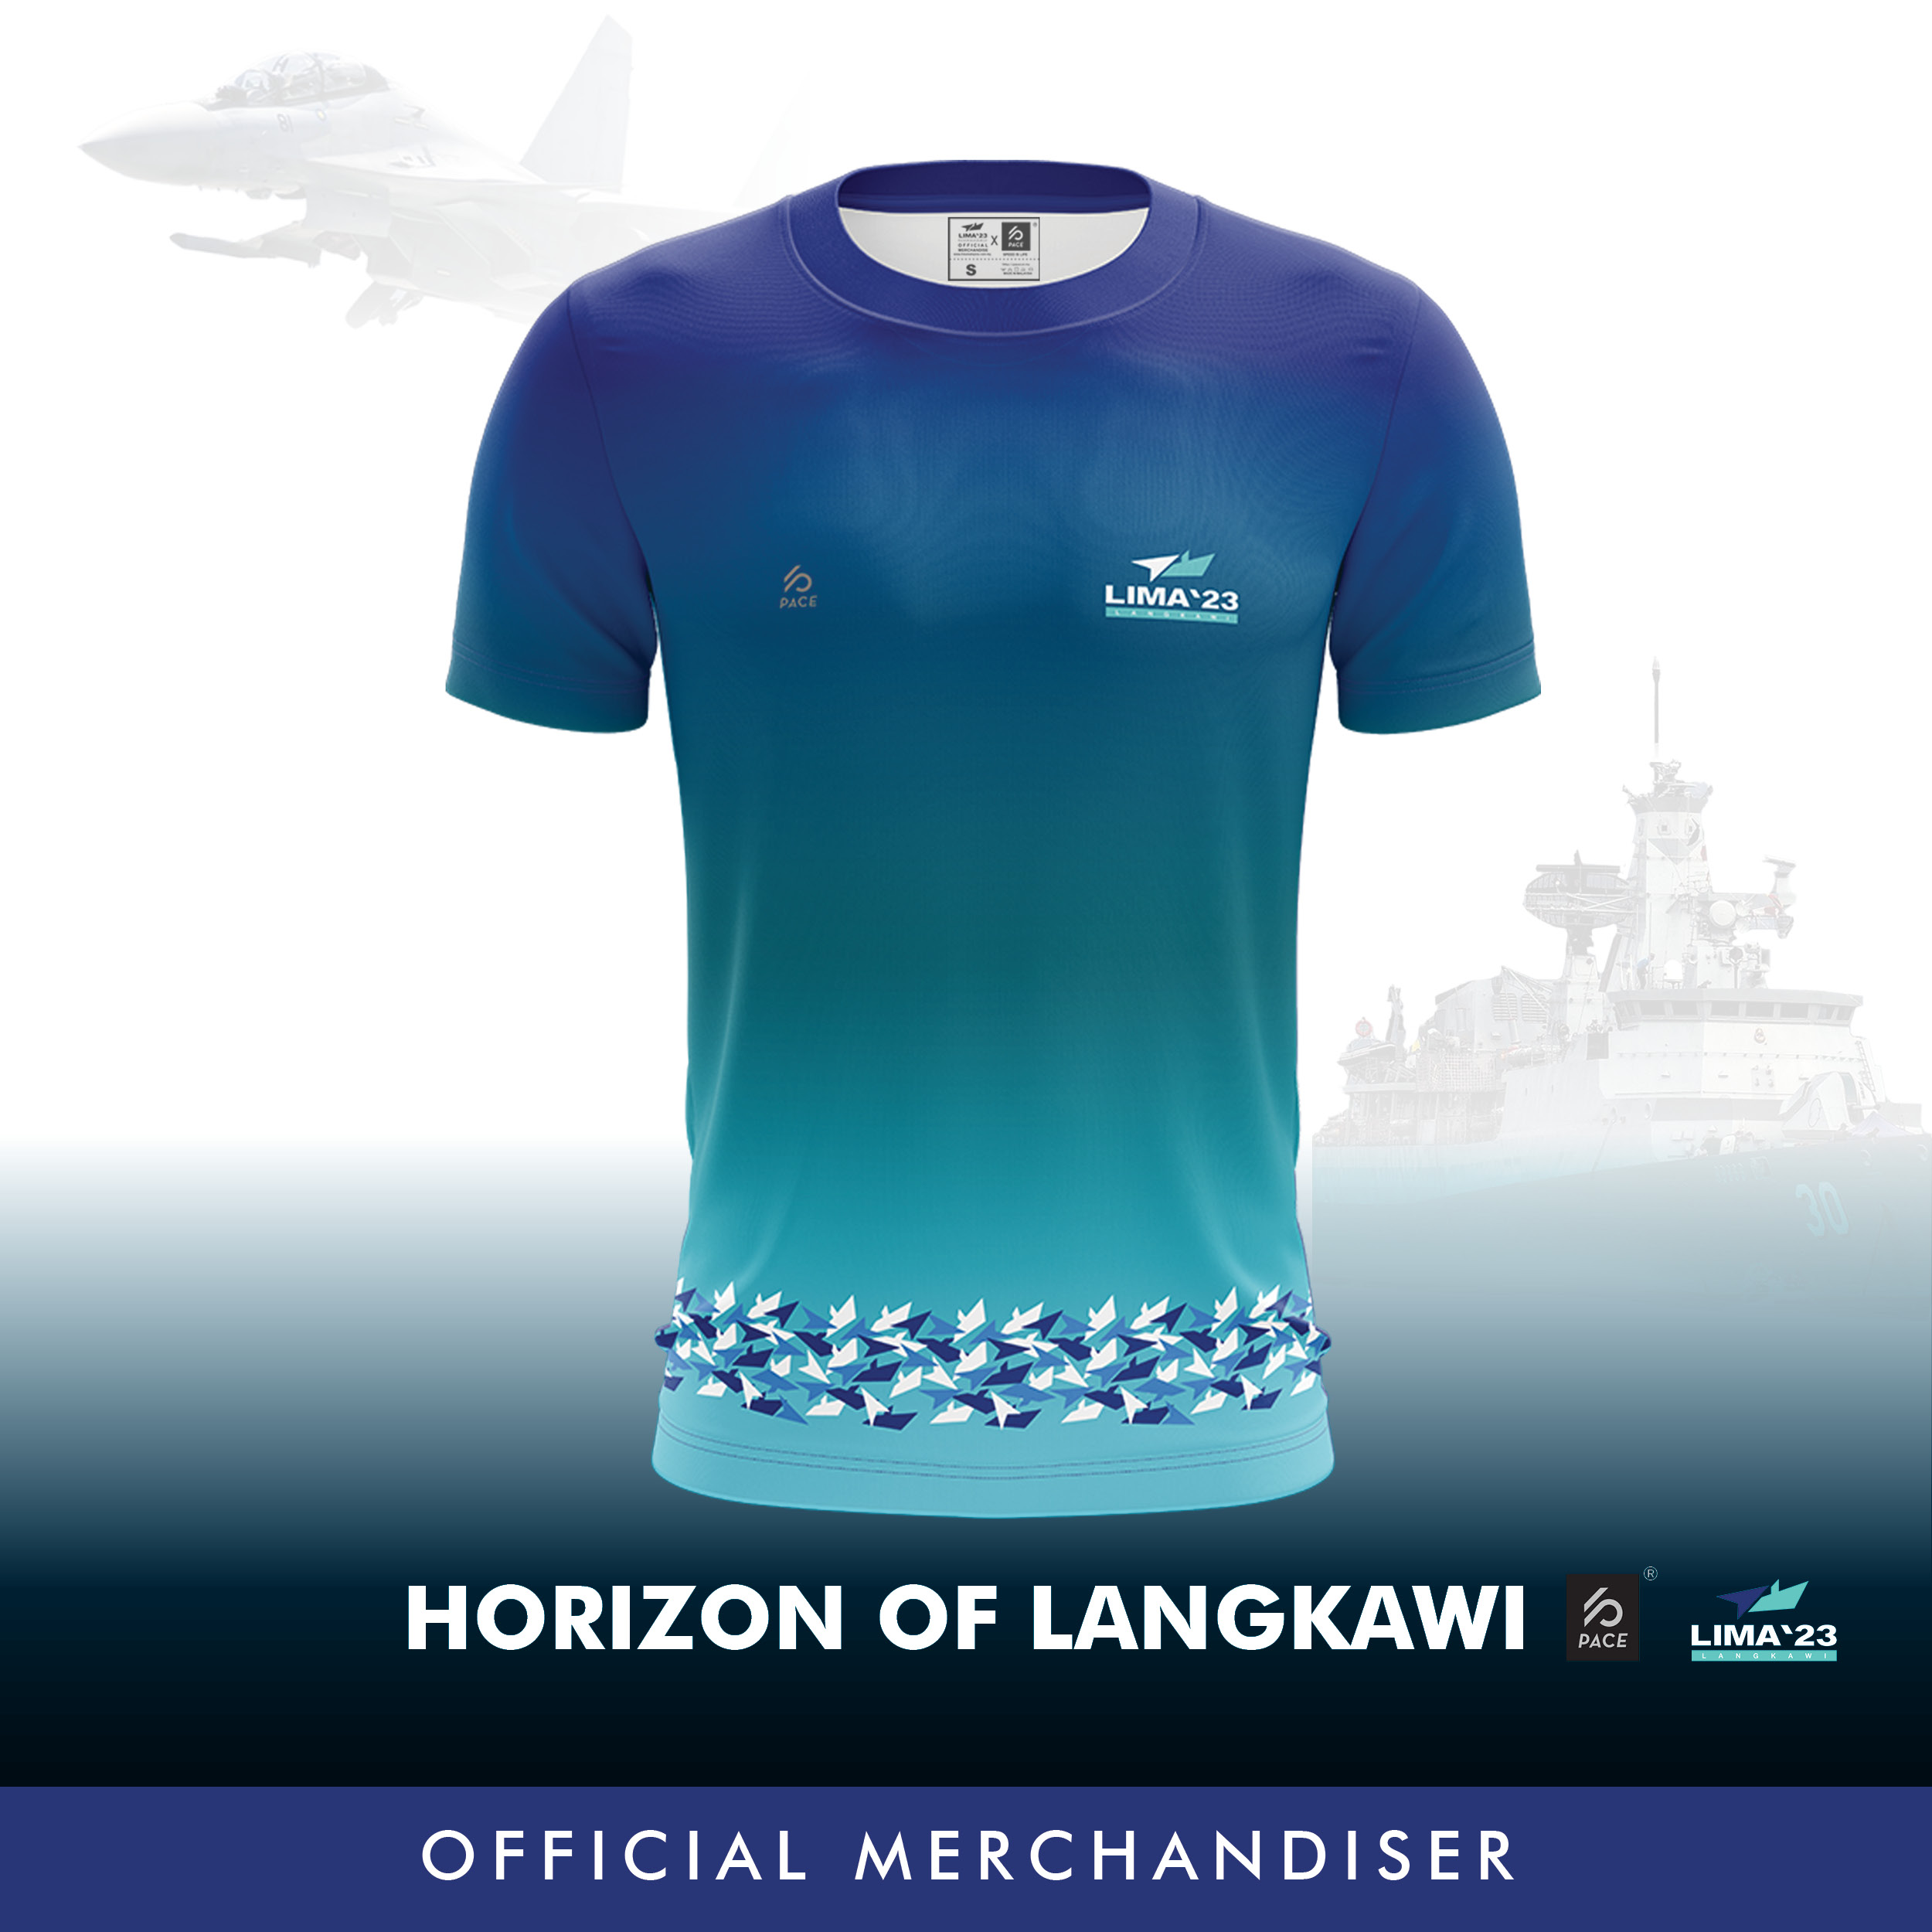 Horizon of Langkawi - Limited Edition Tee Shirt